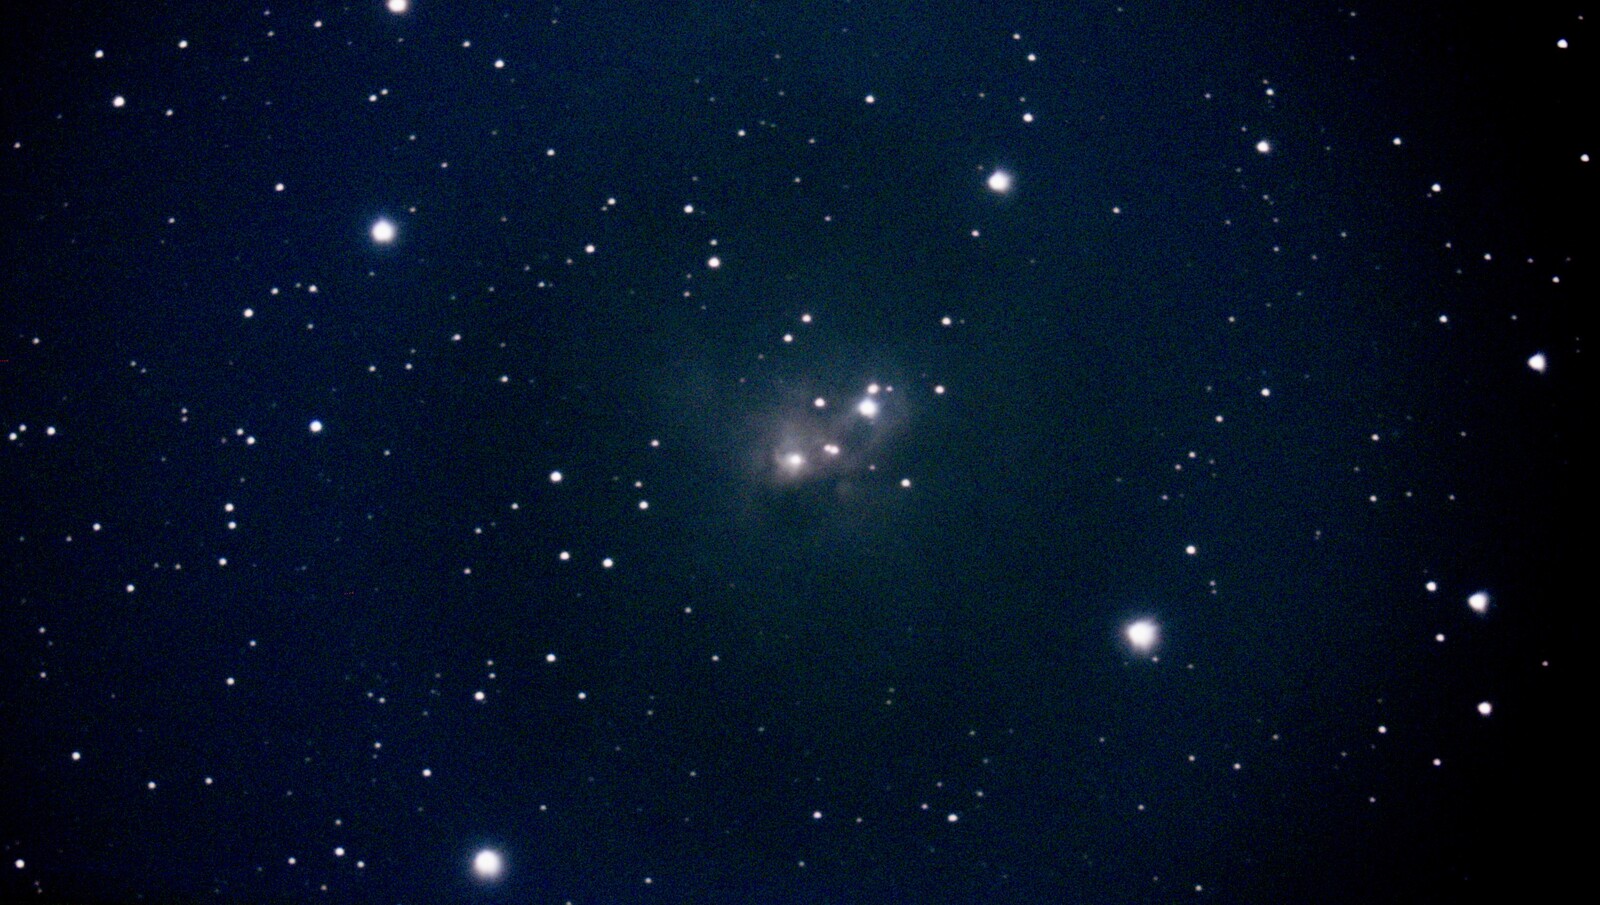 NGC1788 - The Cosmic Bat Nebula